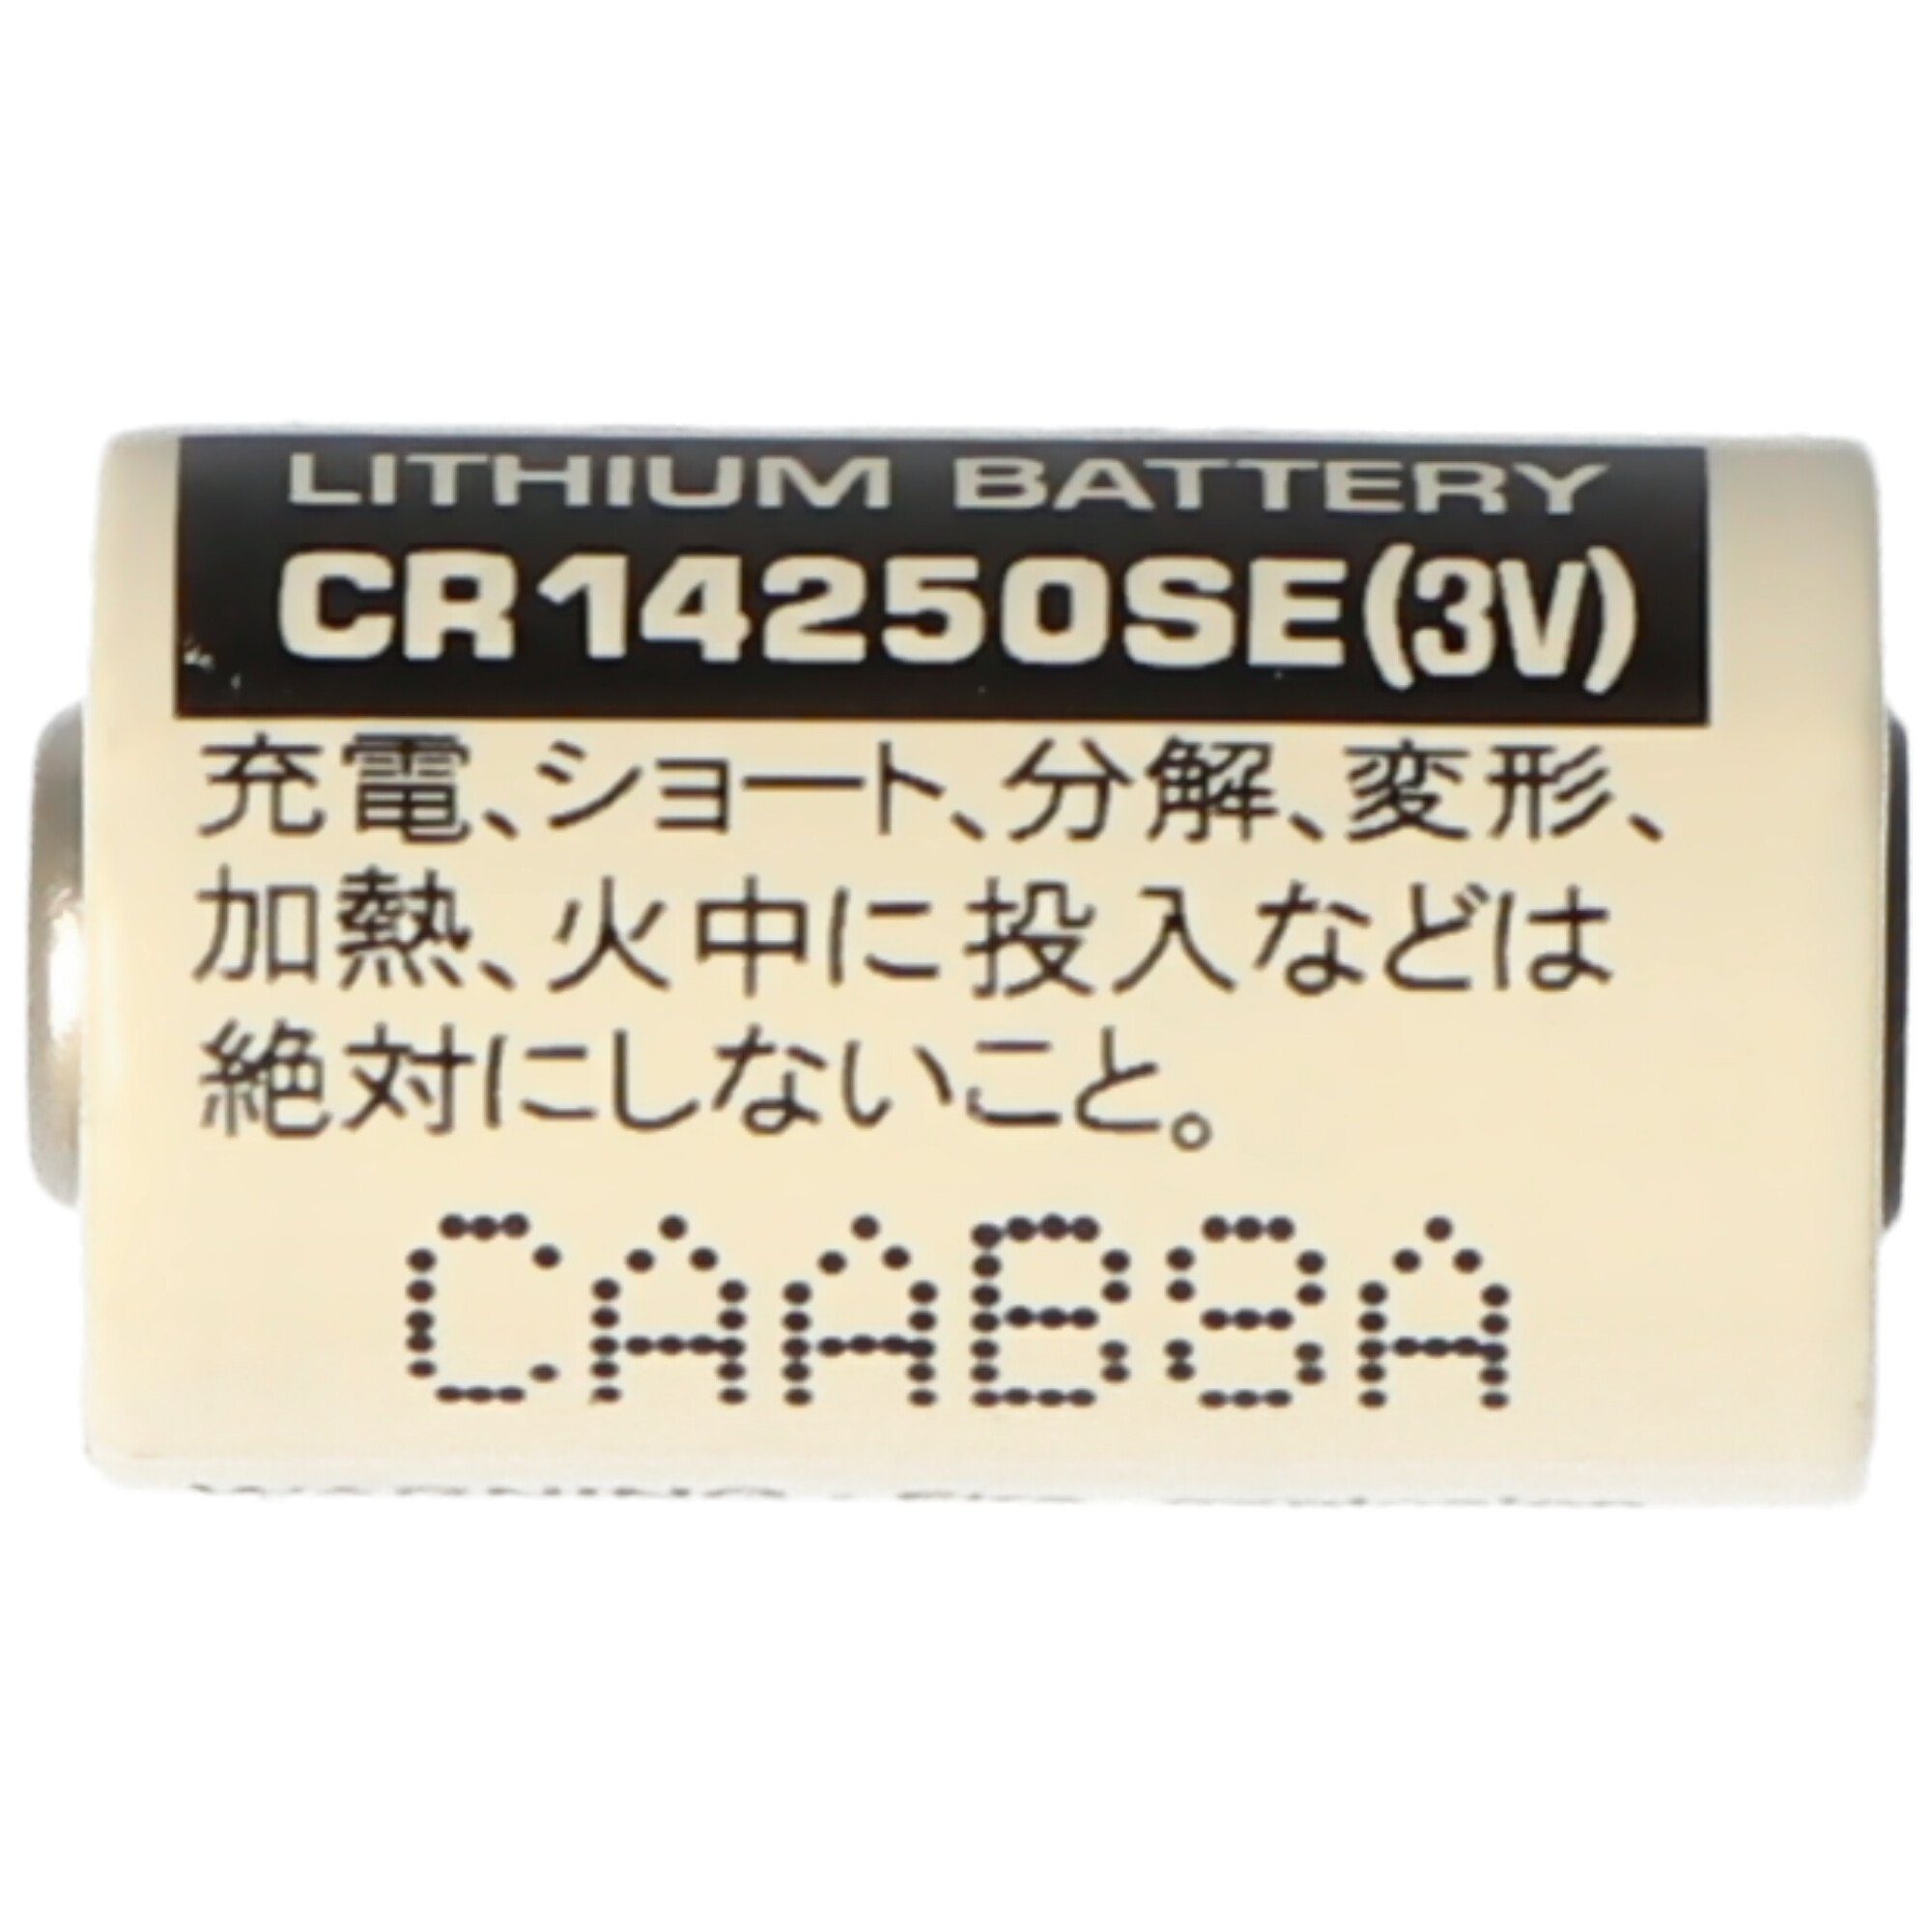 Sanyo Sanyo Lithium Batterie CR14250 IEC 1/2AA, SE FDK Batterie, CR14250 CR14250 (3,0 V)